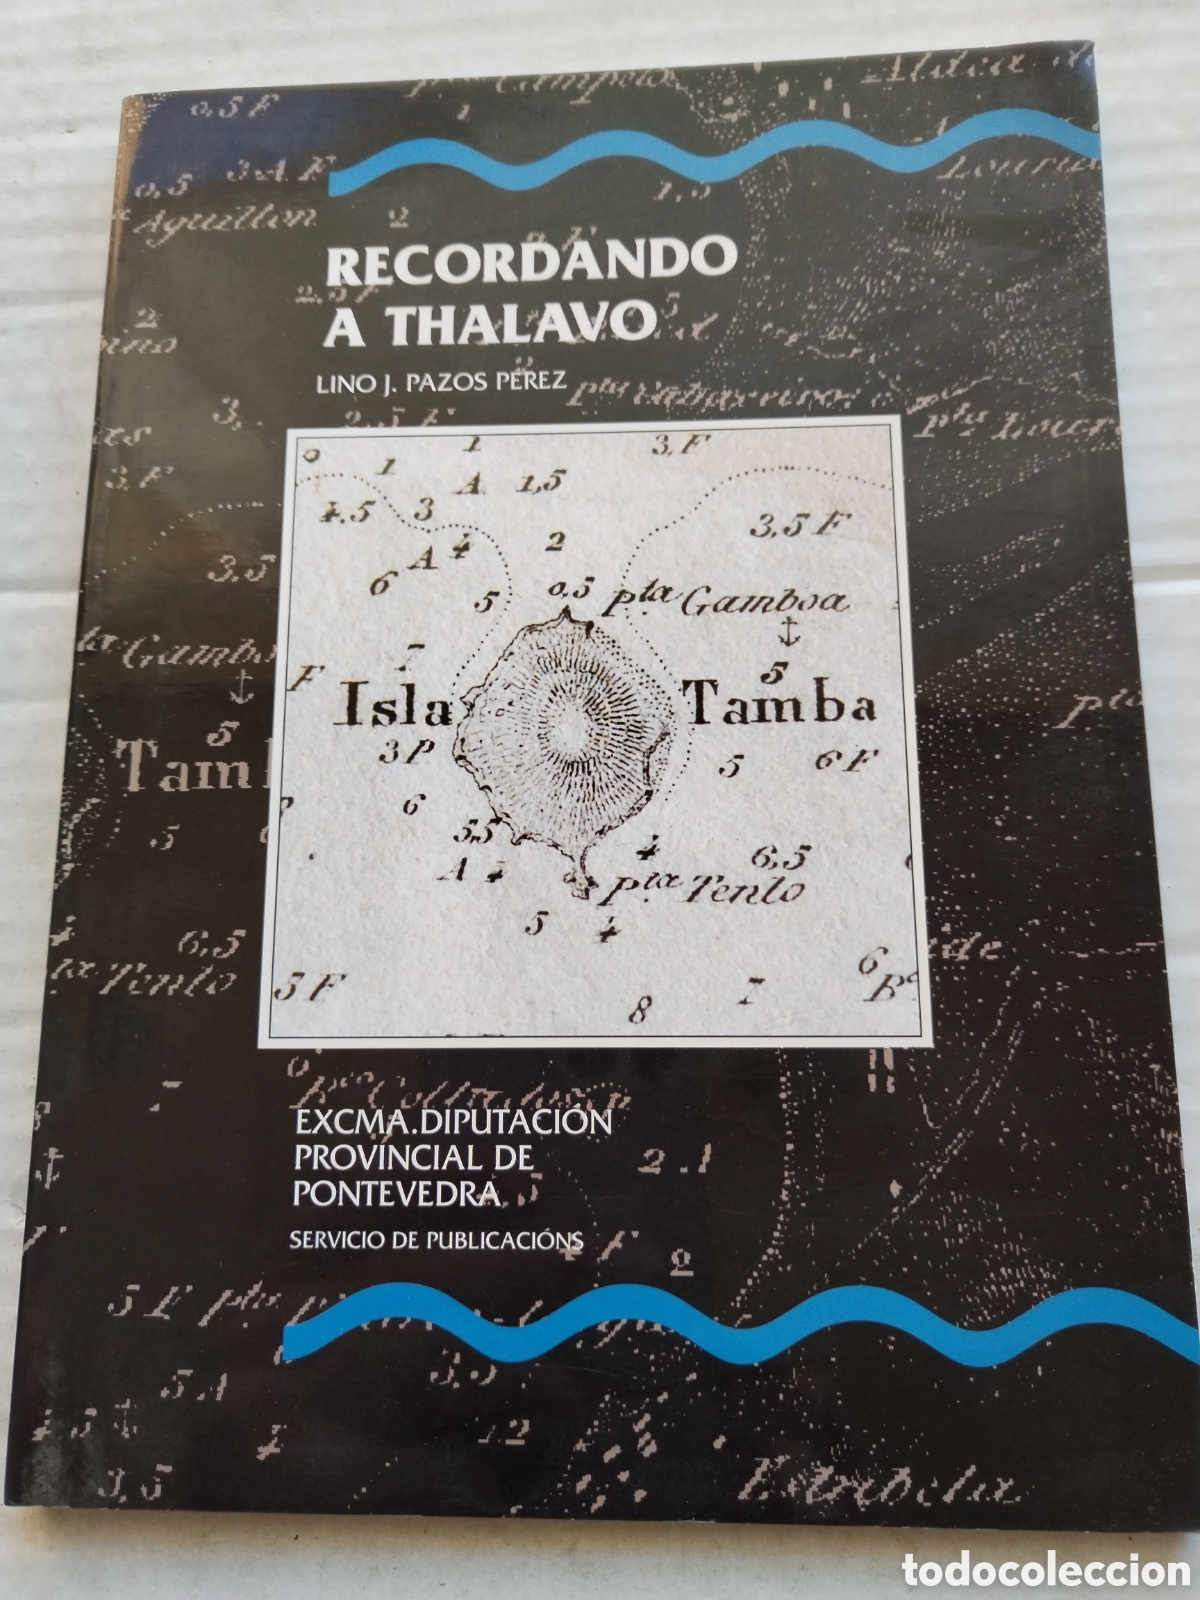 recordando a thalavo/lino j. pazos - Buy Other used history books on  todocoleccion